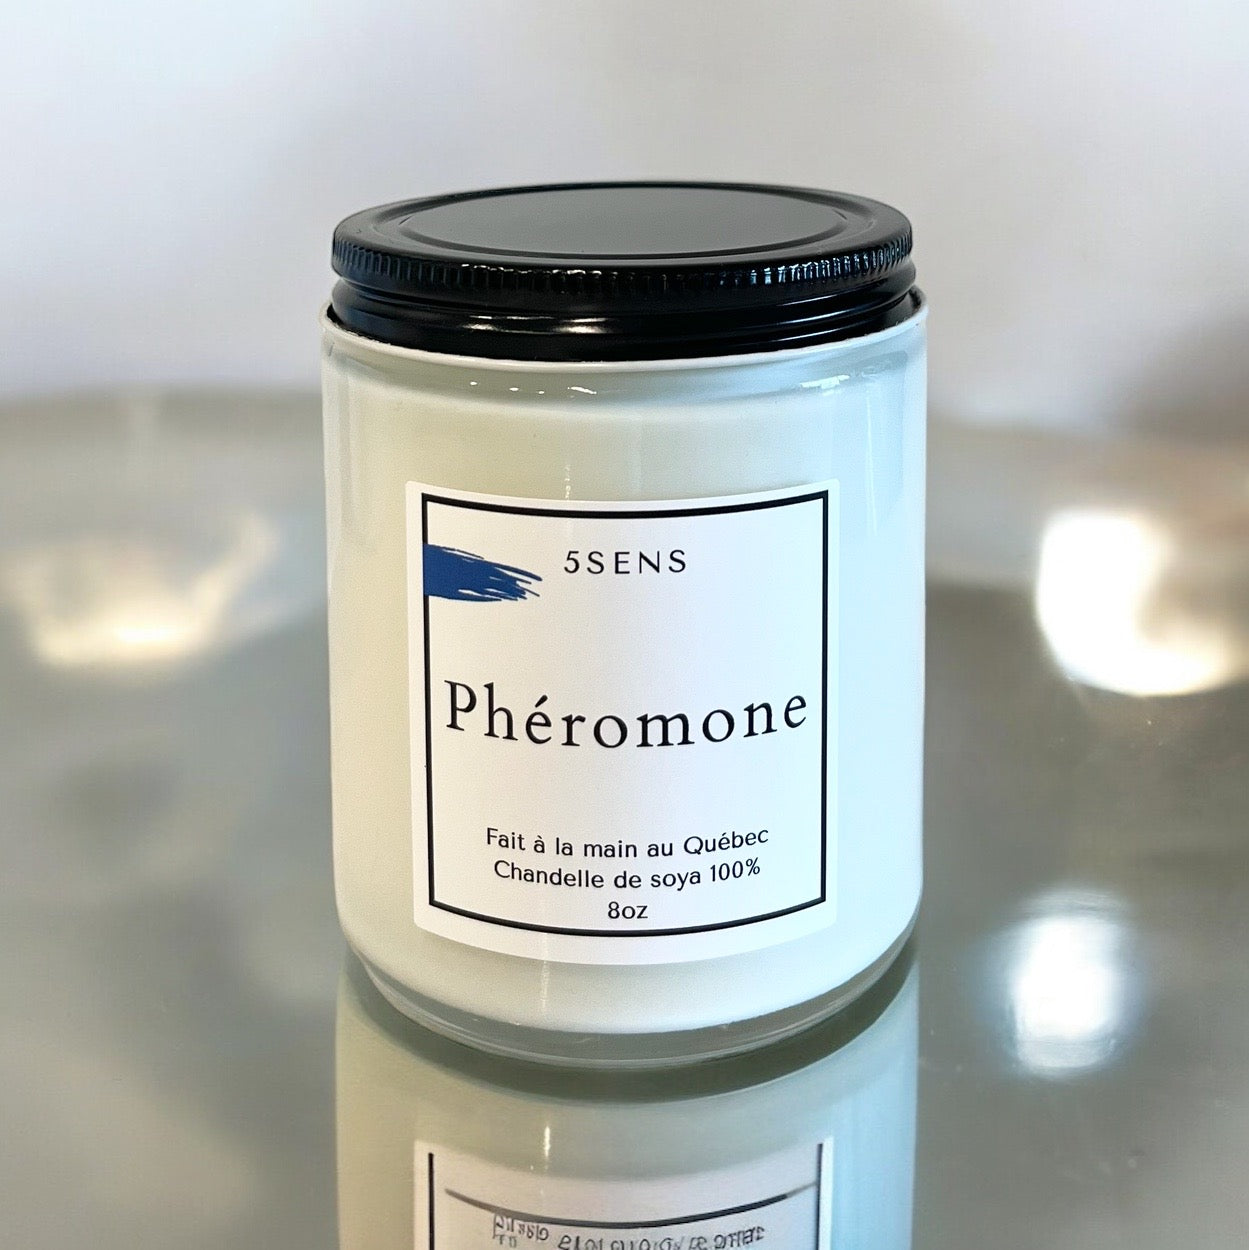 Phéromone